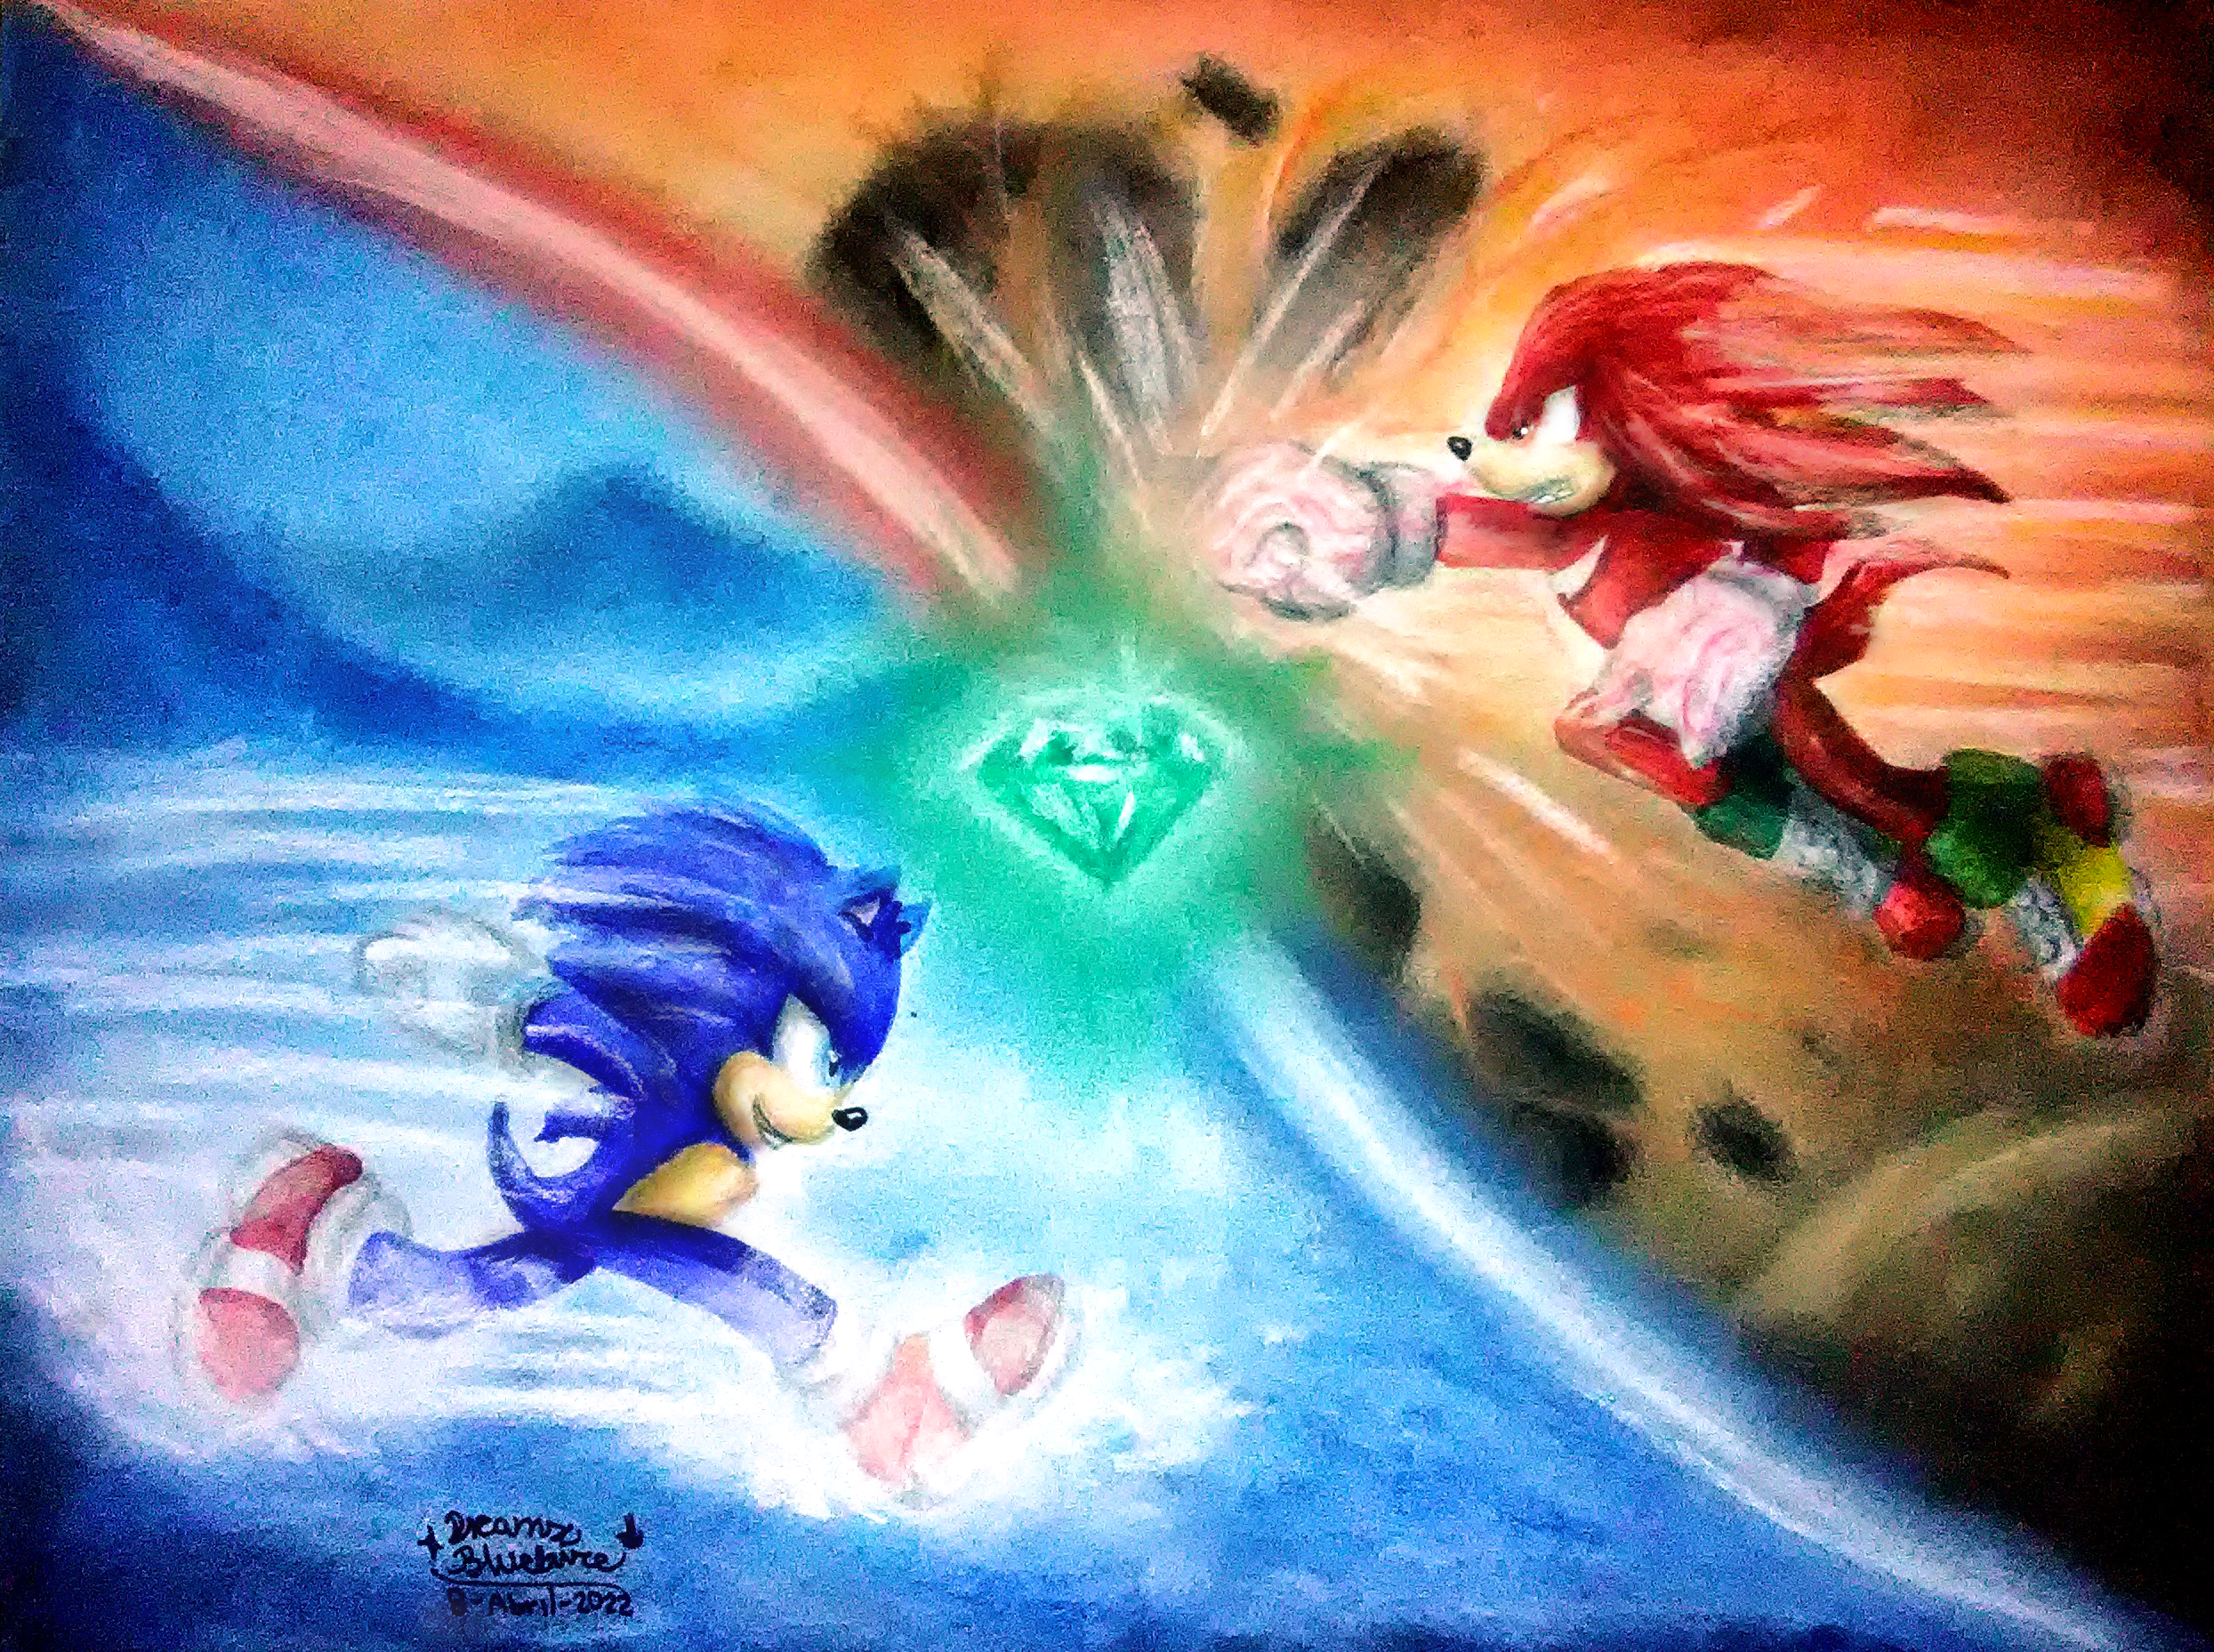 Sonic vs Knuckles (Sonic Movie 2) by DreamsBluefire on DeviantArt